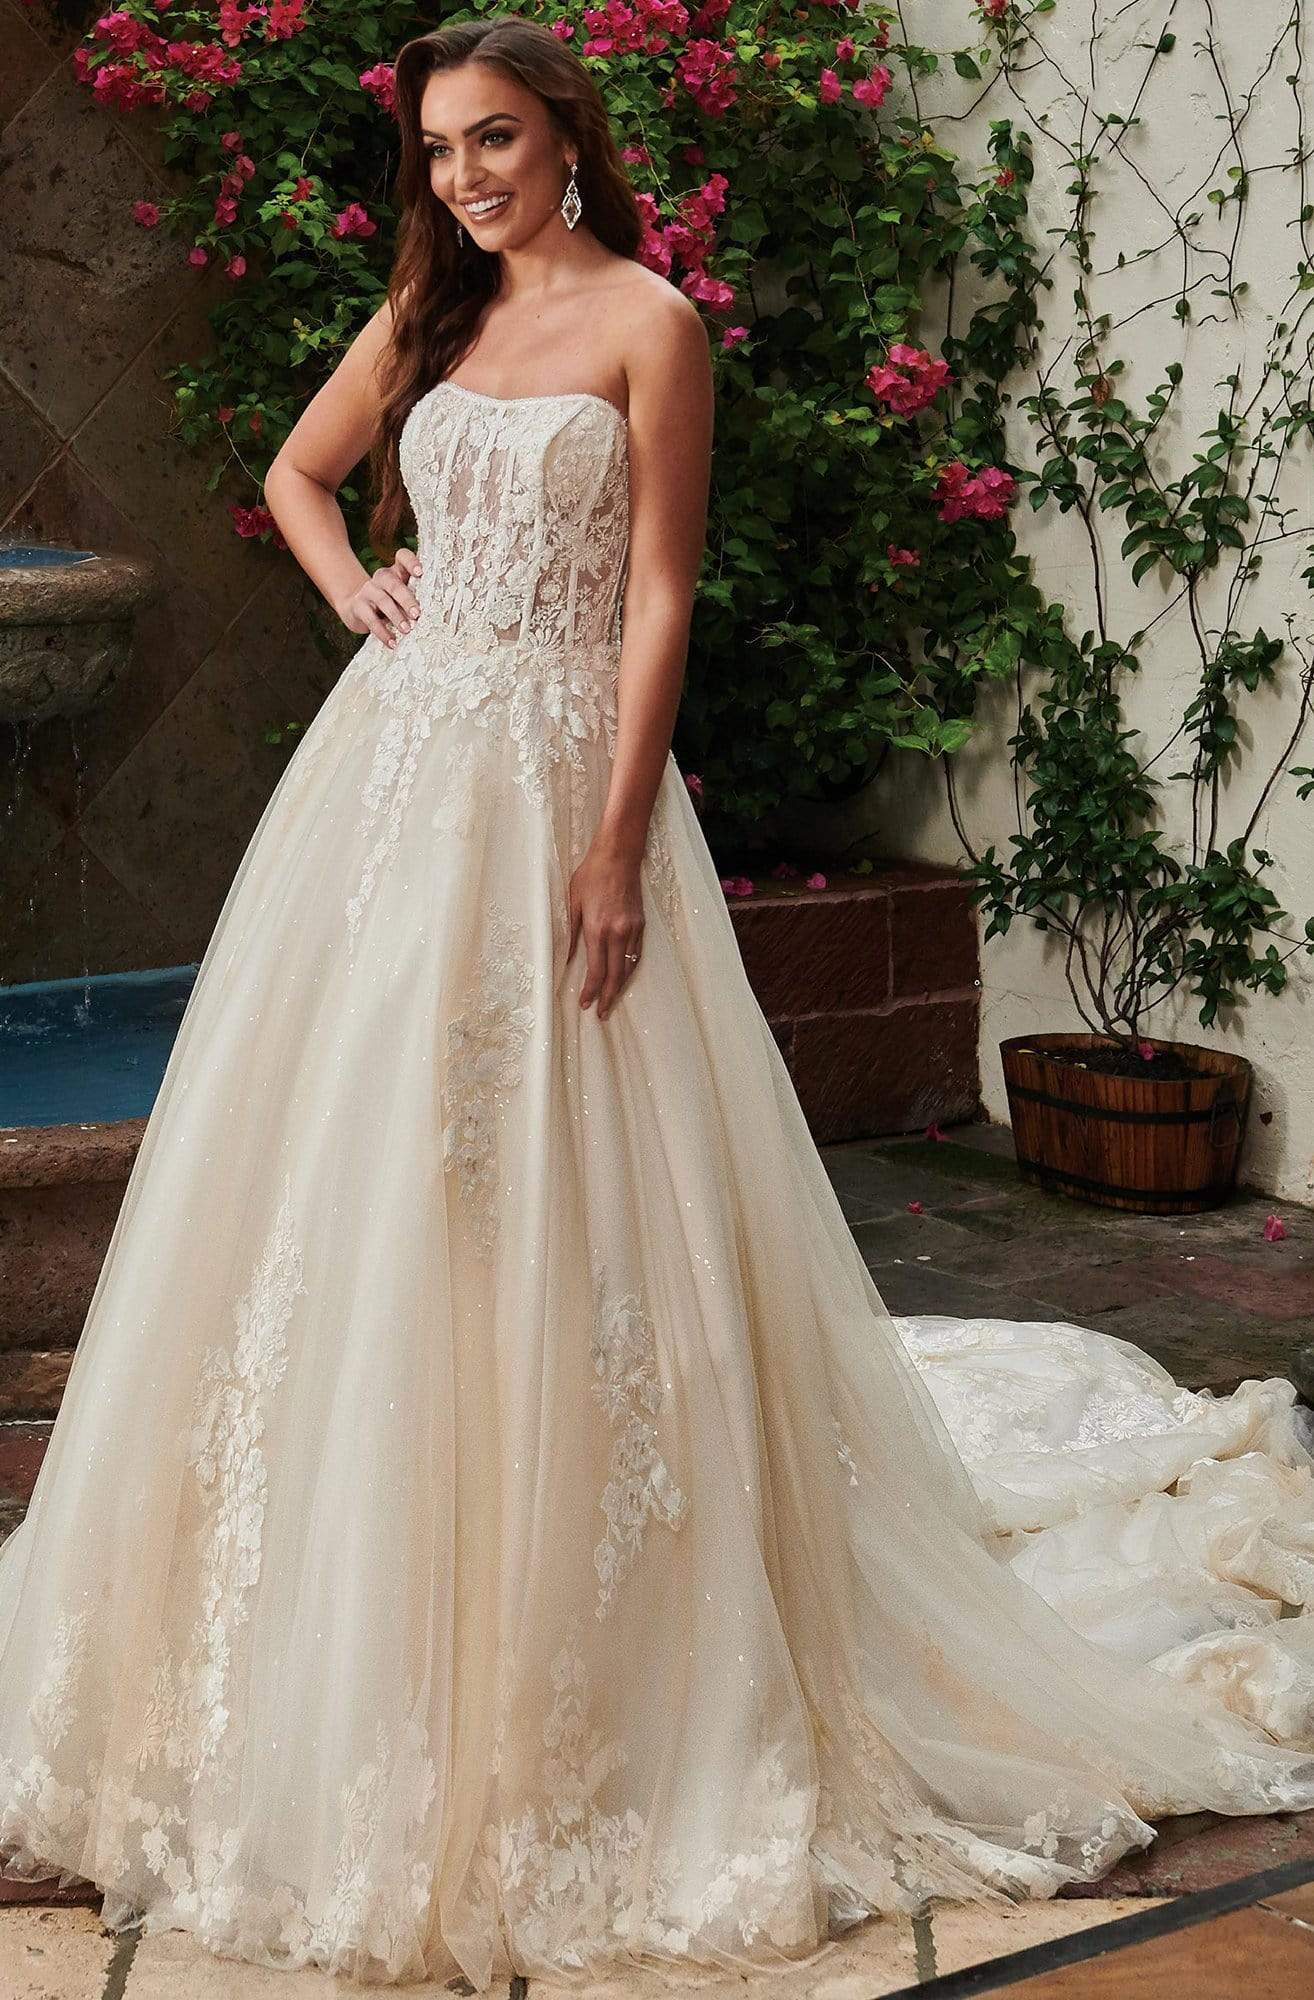 Lo'Adoro Bridal By Rachel Allan - M752 Strapless Lace Corset Gown Wedding Dresses